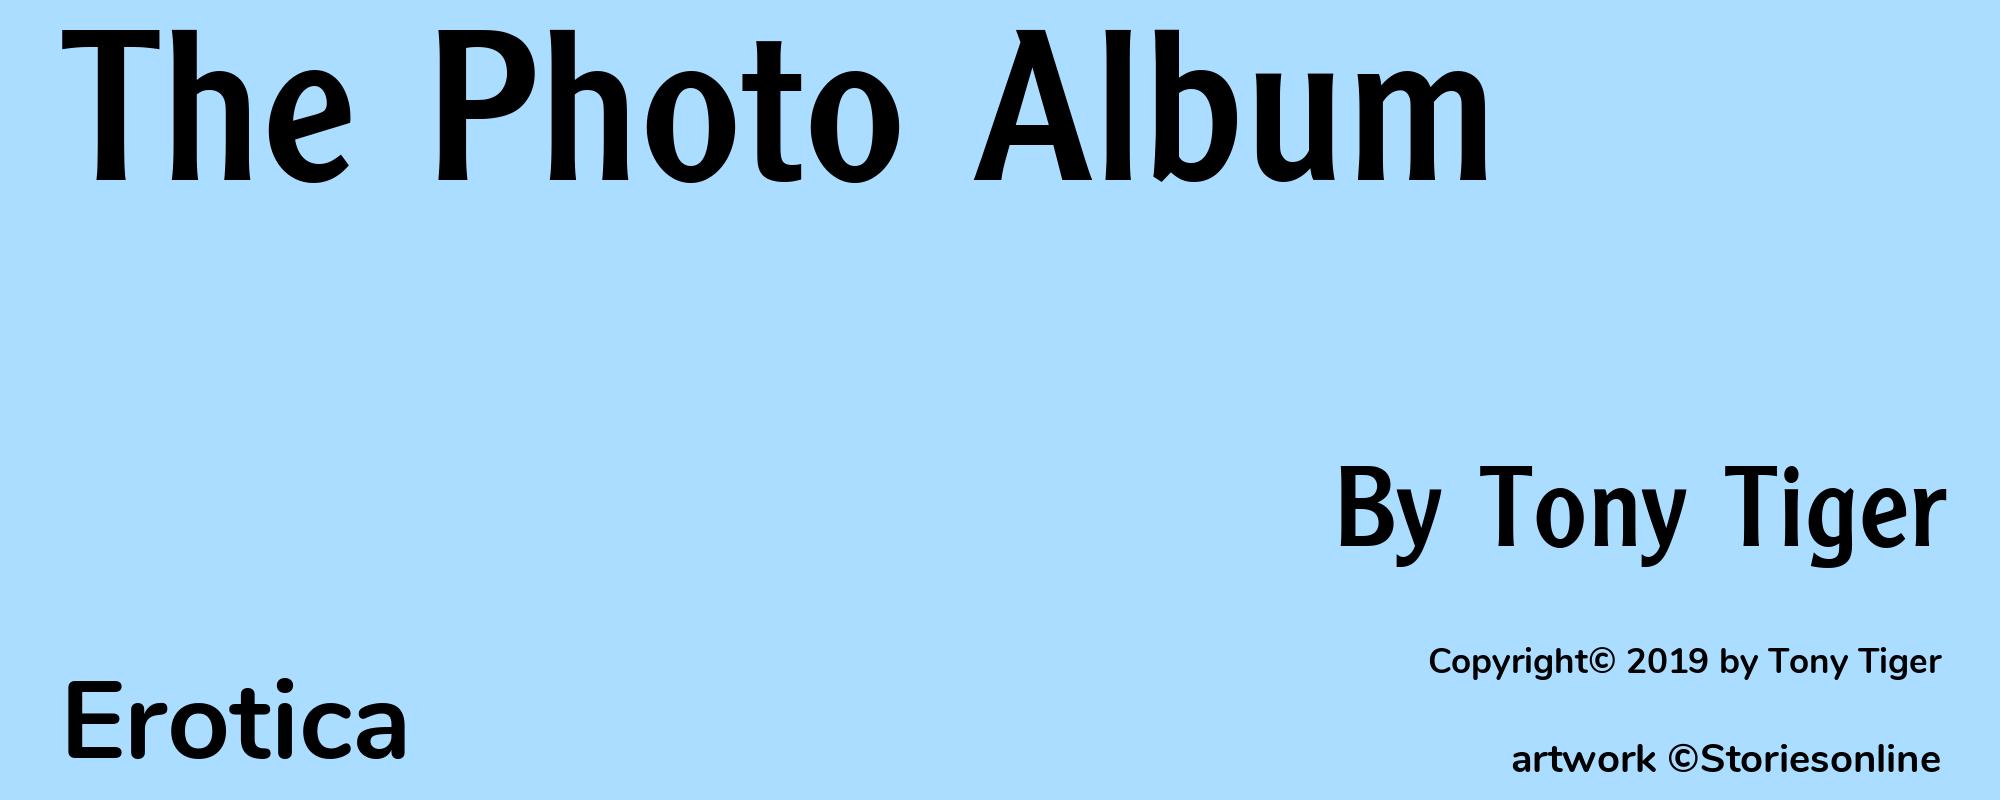 The Photo Album - Cover